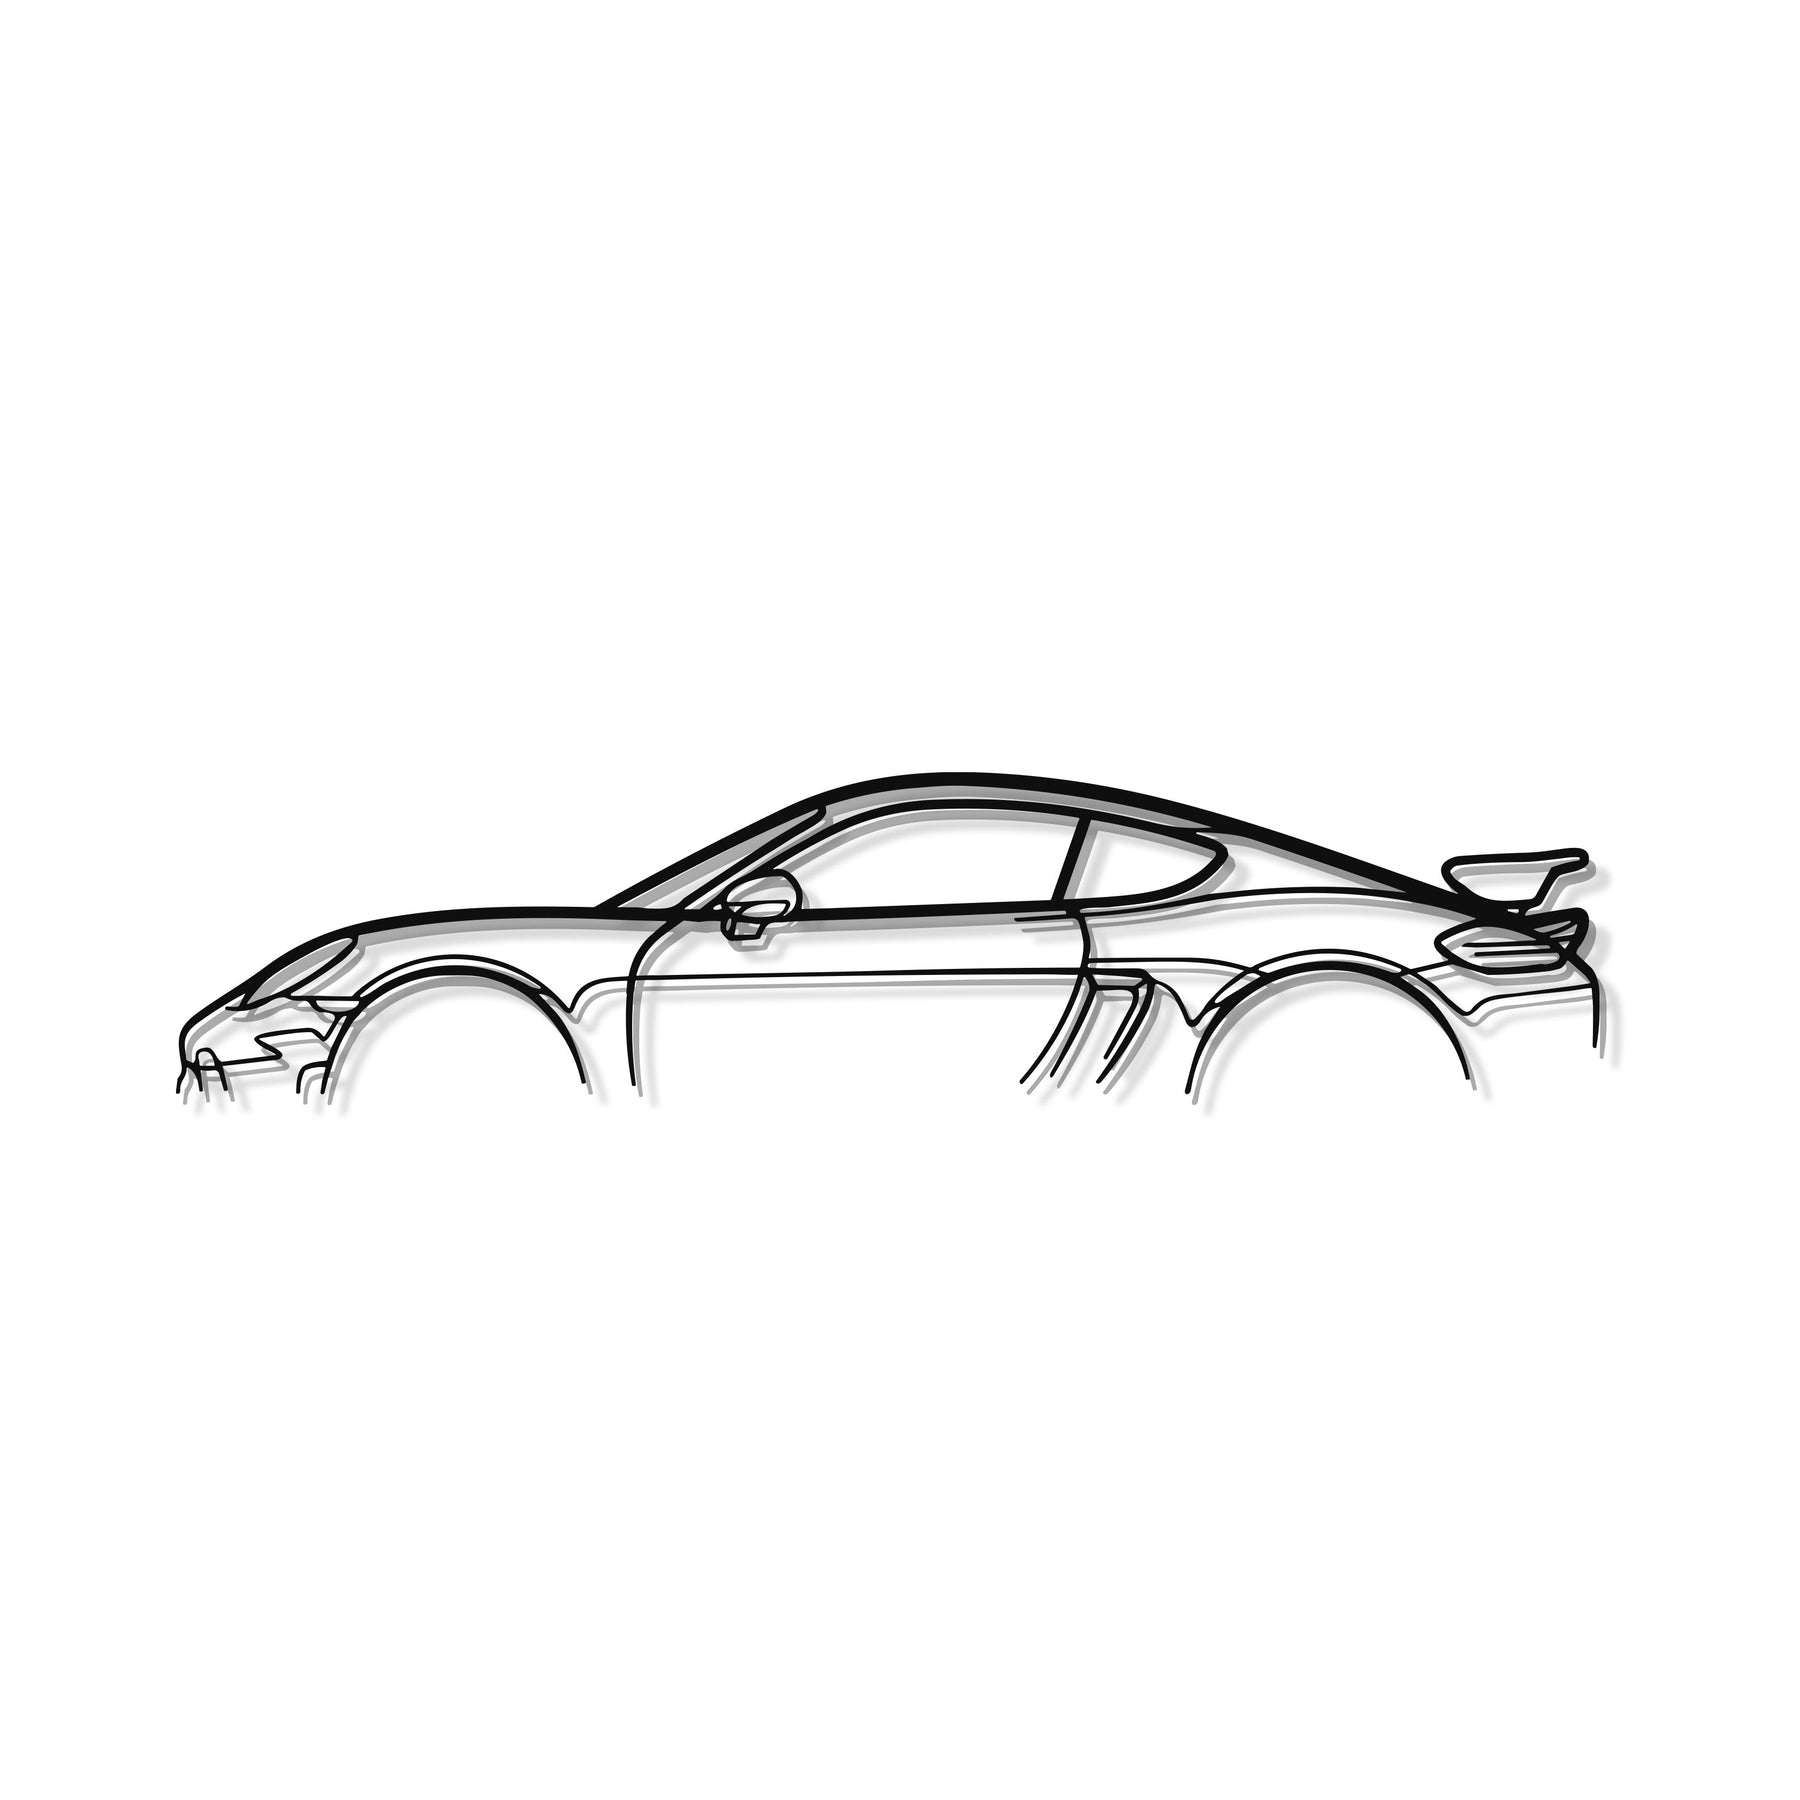 718 Cayman GT4 Metal Car Wall Art - MT0840